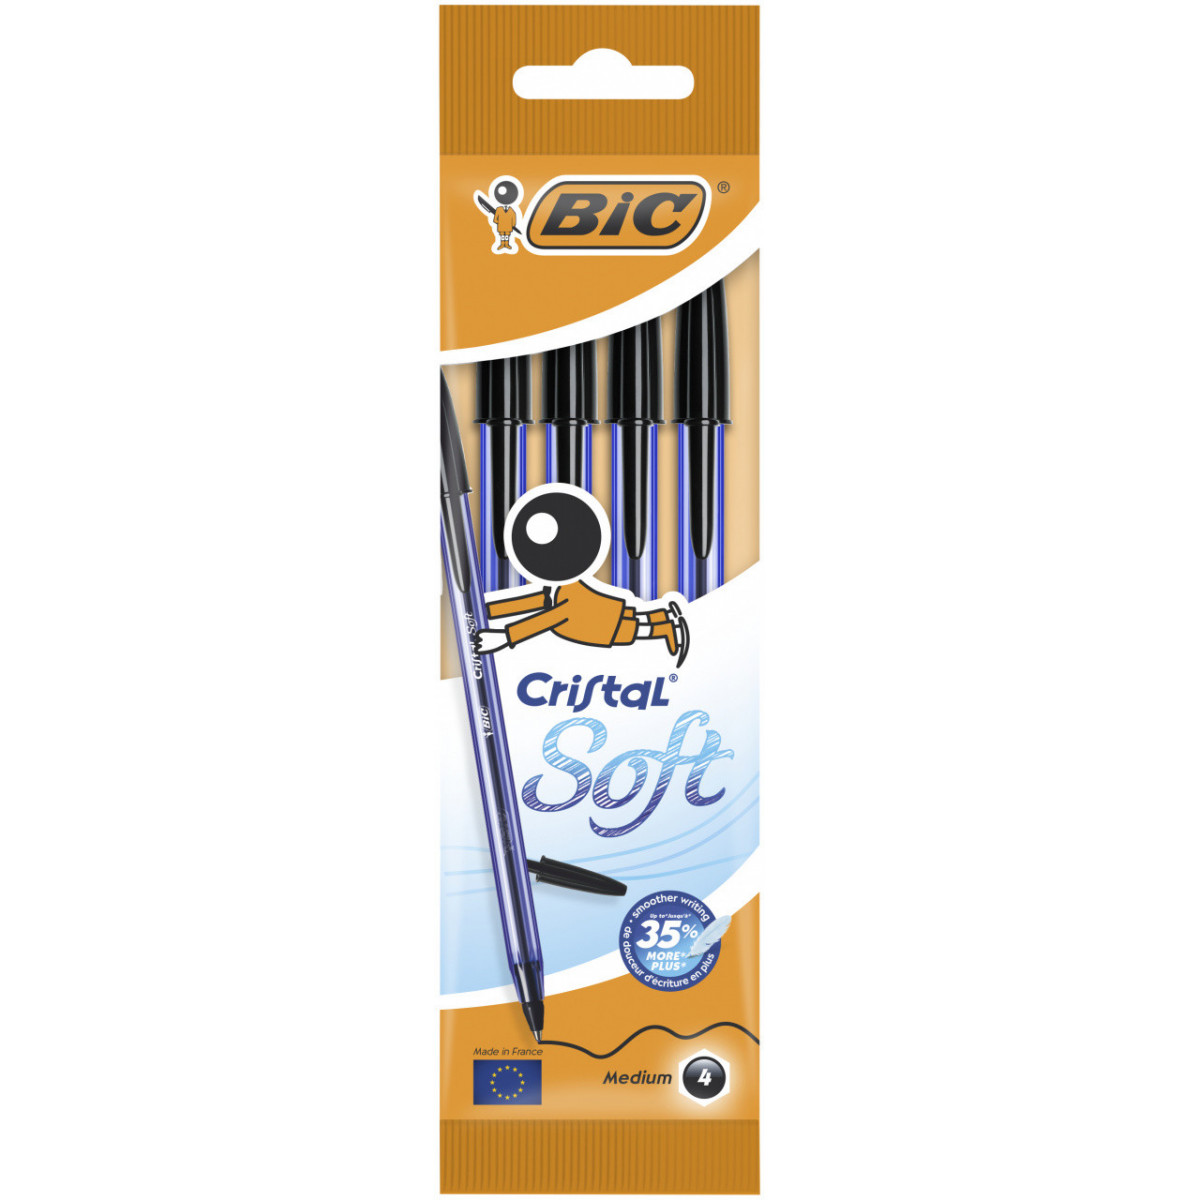 BIC Cristal Soft, Penne Nere a Sfera (Punta Media 1.2mm